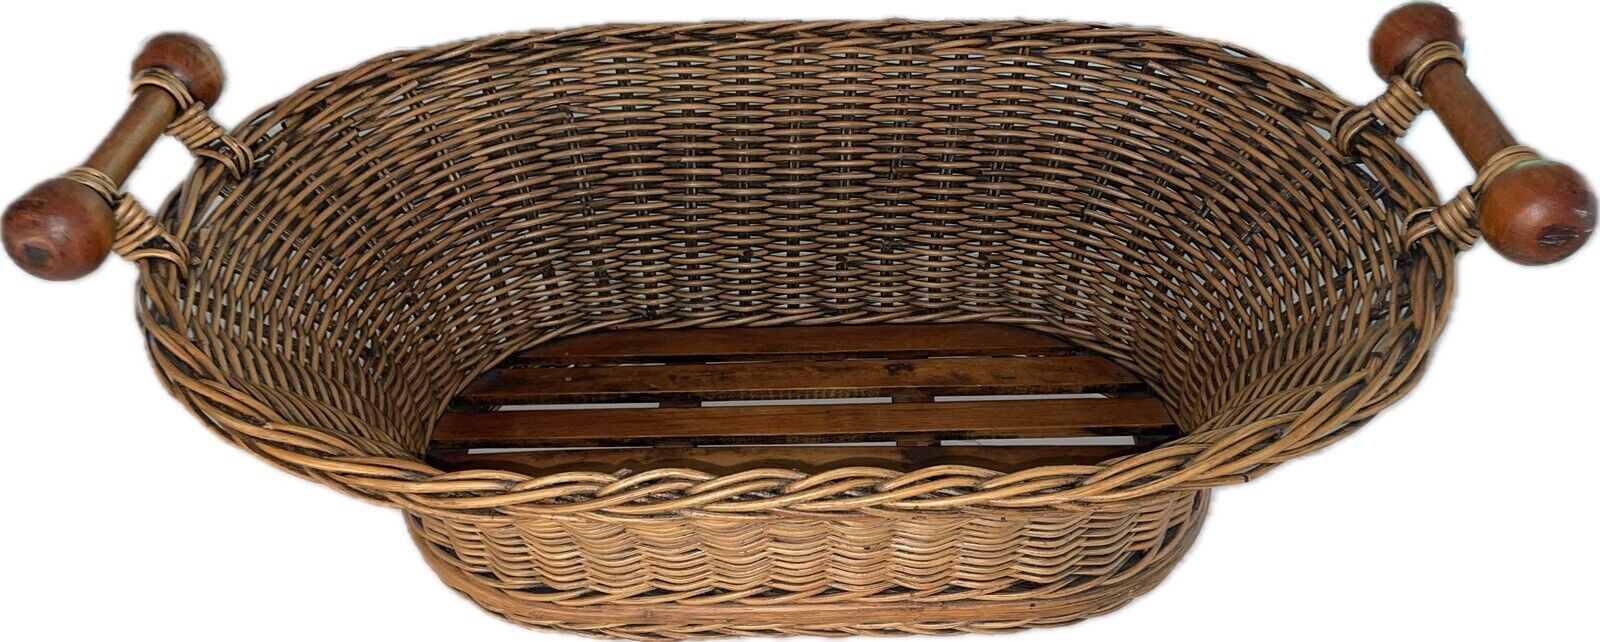 Vintage Farmhouse European Rustic Rattan Basket Wood Handles & Bottom -Laundry